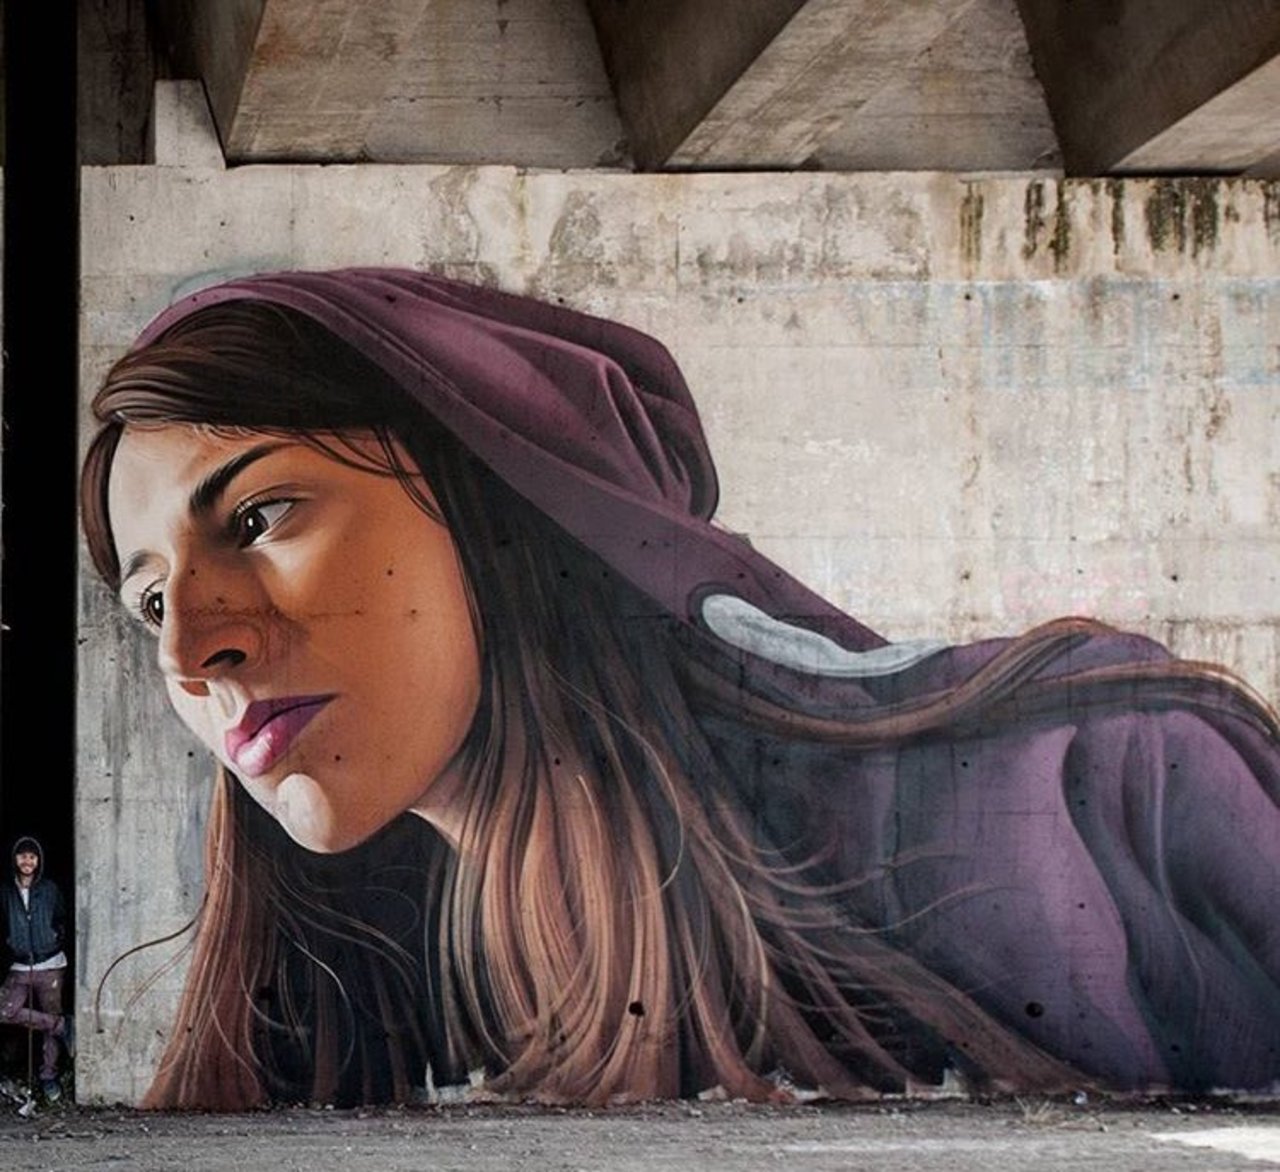 New Street Art • Lonac #art #mural #graffiti #streetart https://t.co/GycFwNYQhR